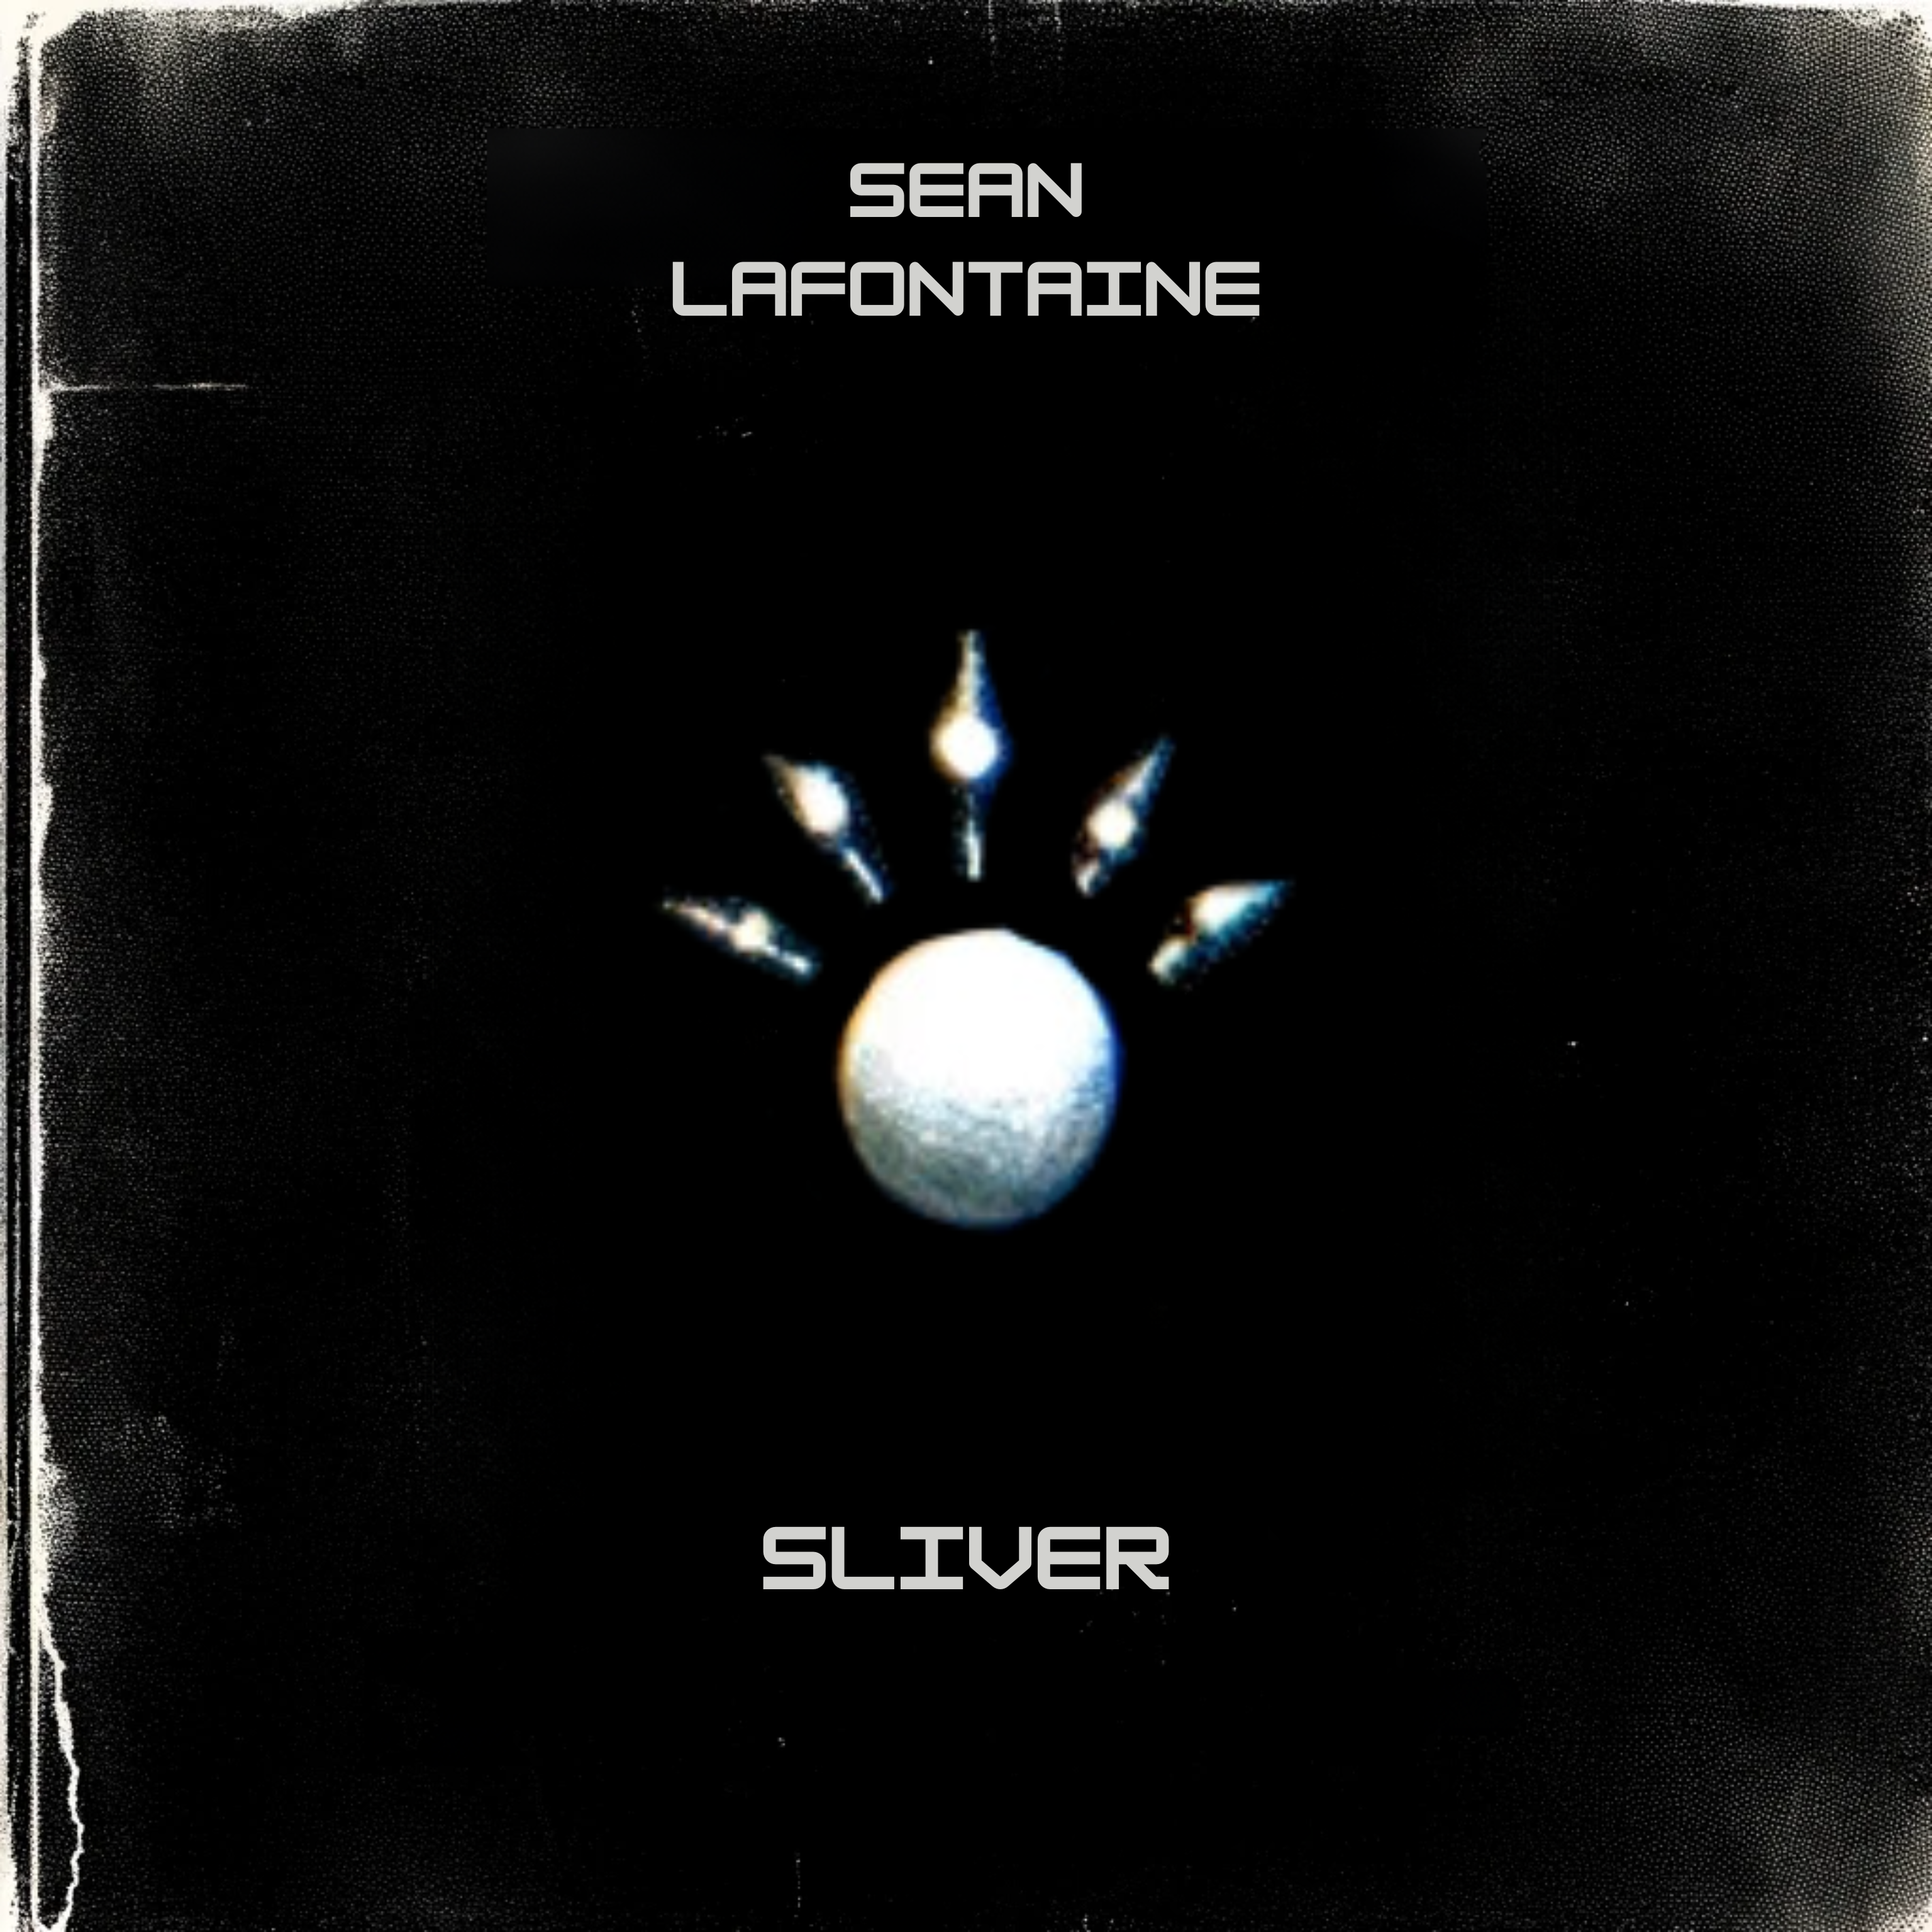 Sean Lafontaine "Sliver" single artwork